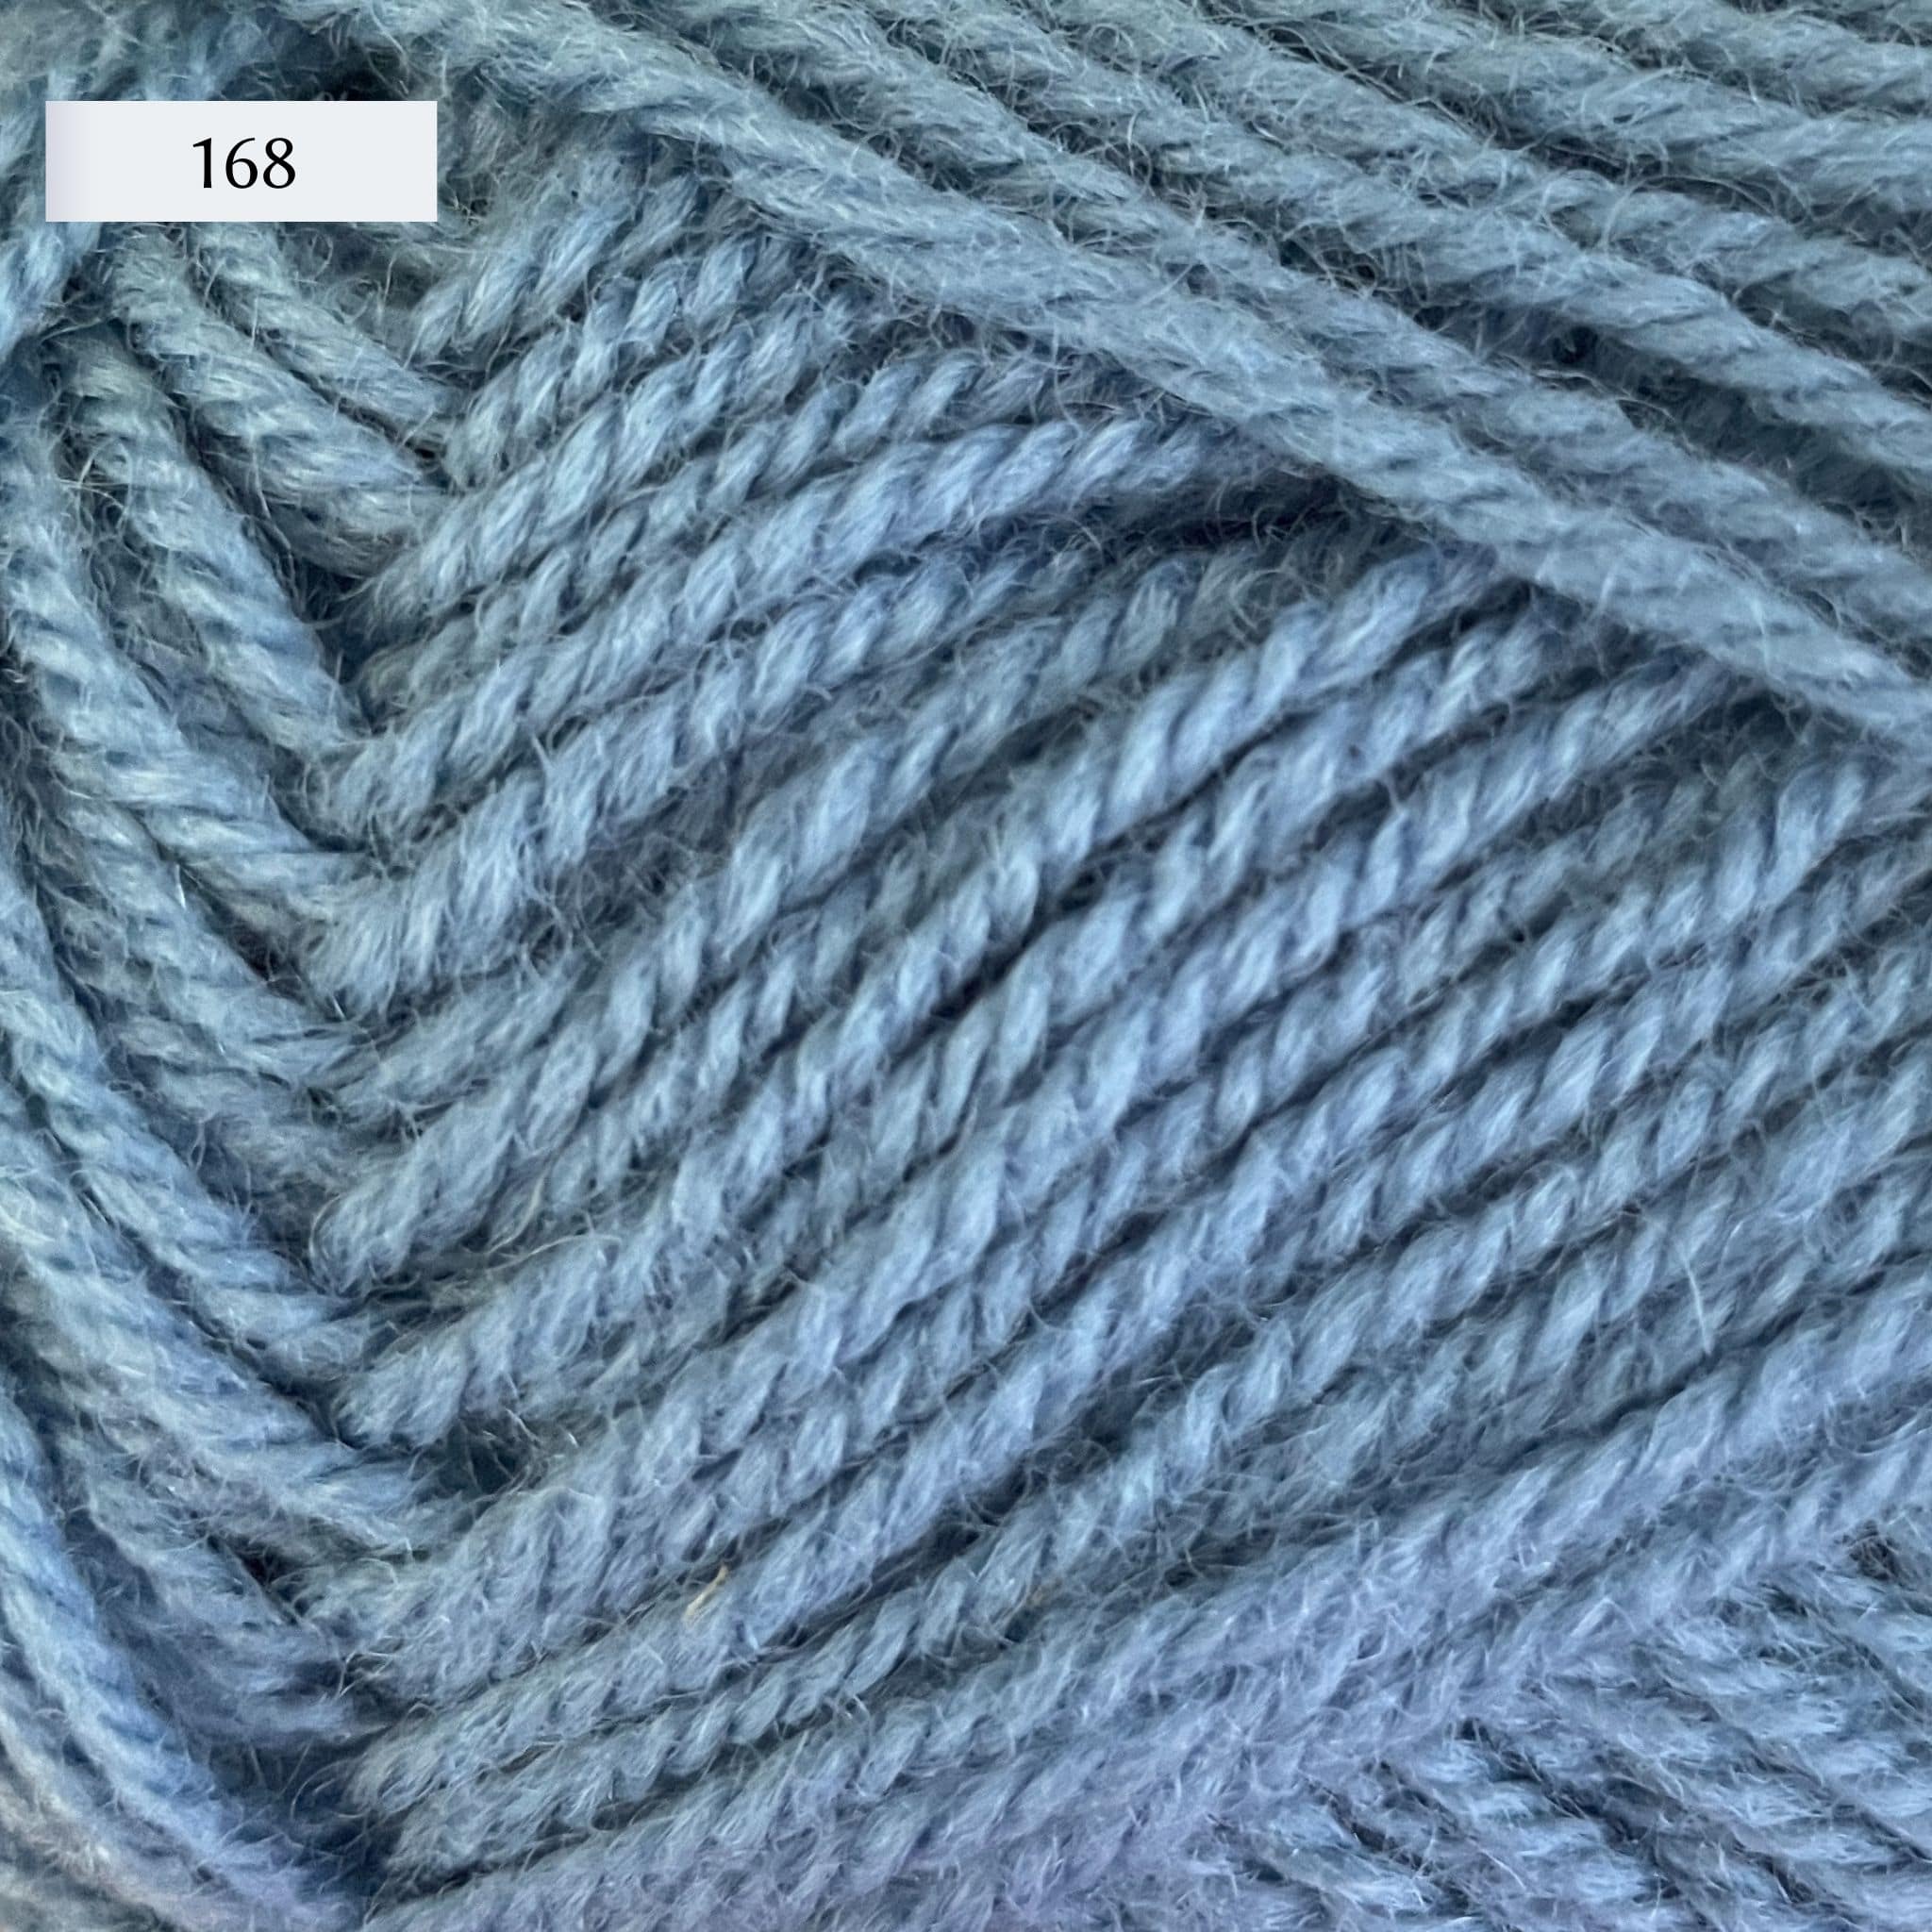 Rauma Strikkegarn, DK weight yarn, in color 168, dusty baby blue